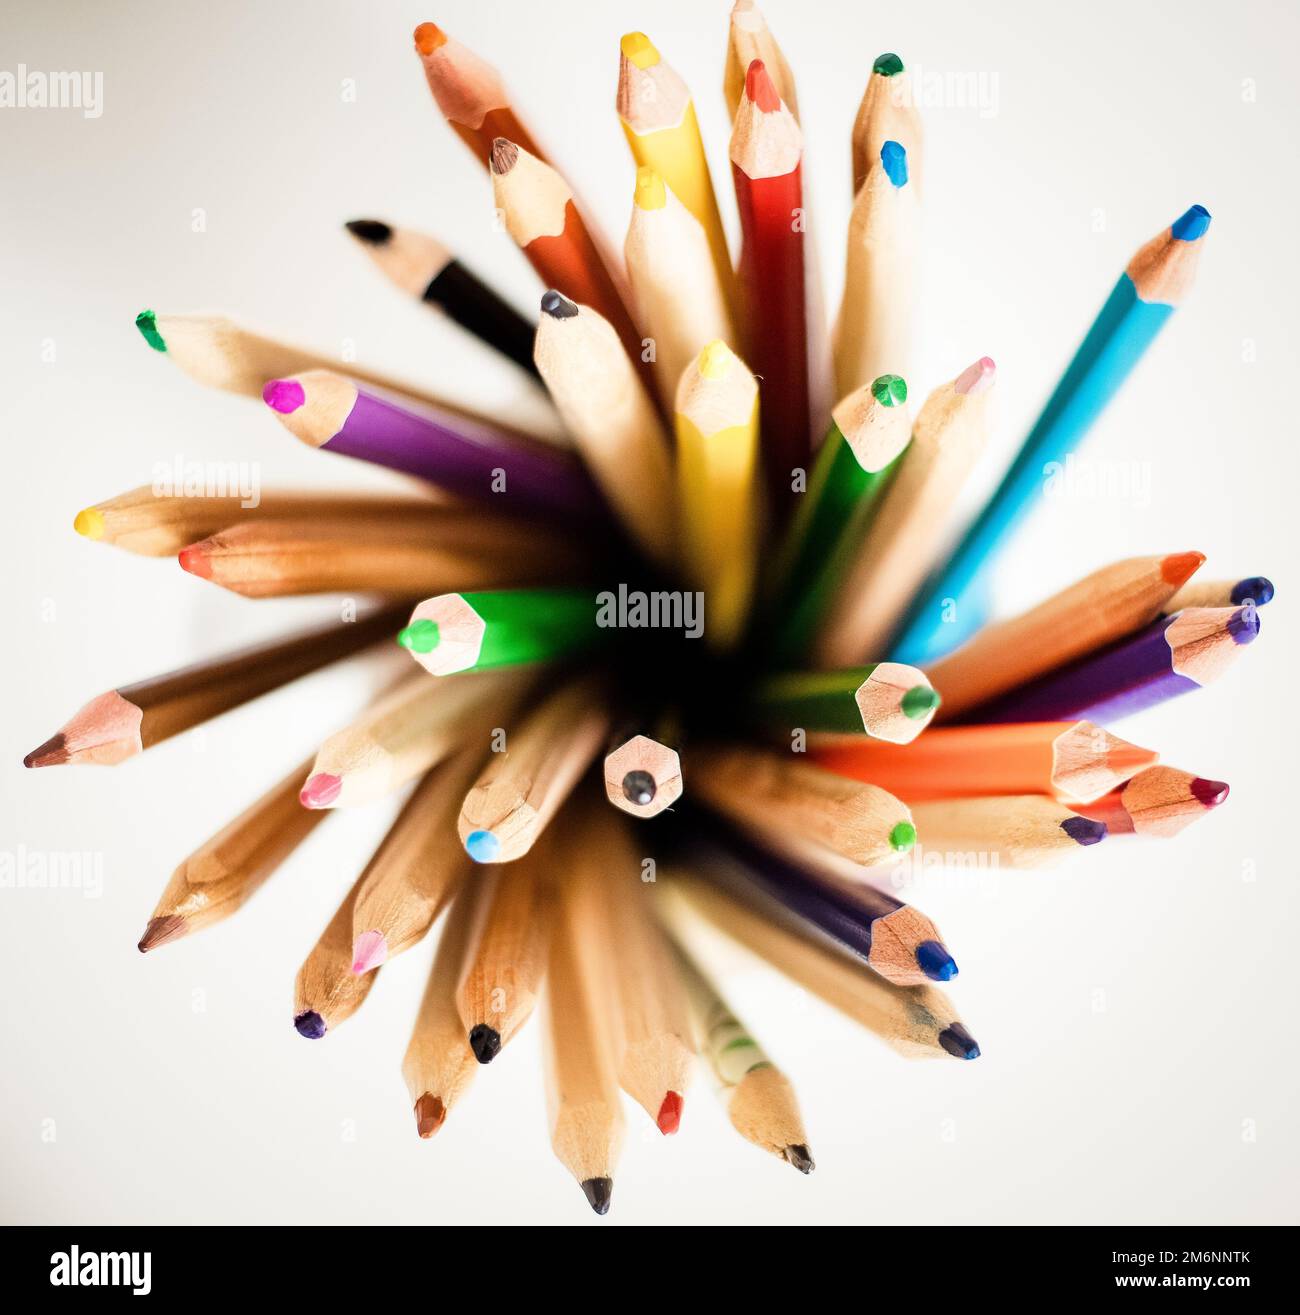 https://c8.alamy.com/comp/2M6NNTK/colored-pencils-back-to-school-2M6NNTK.jpg